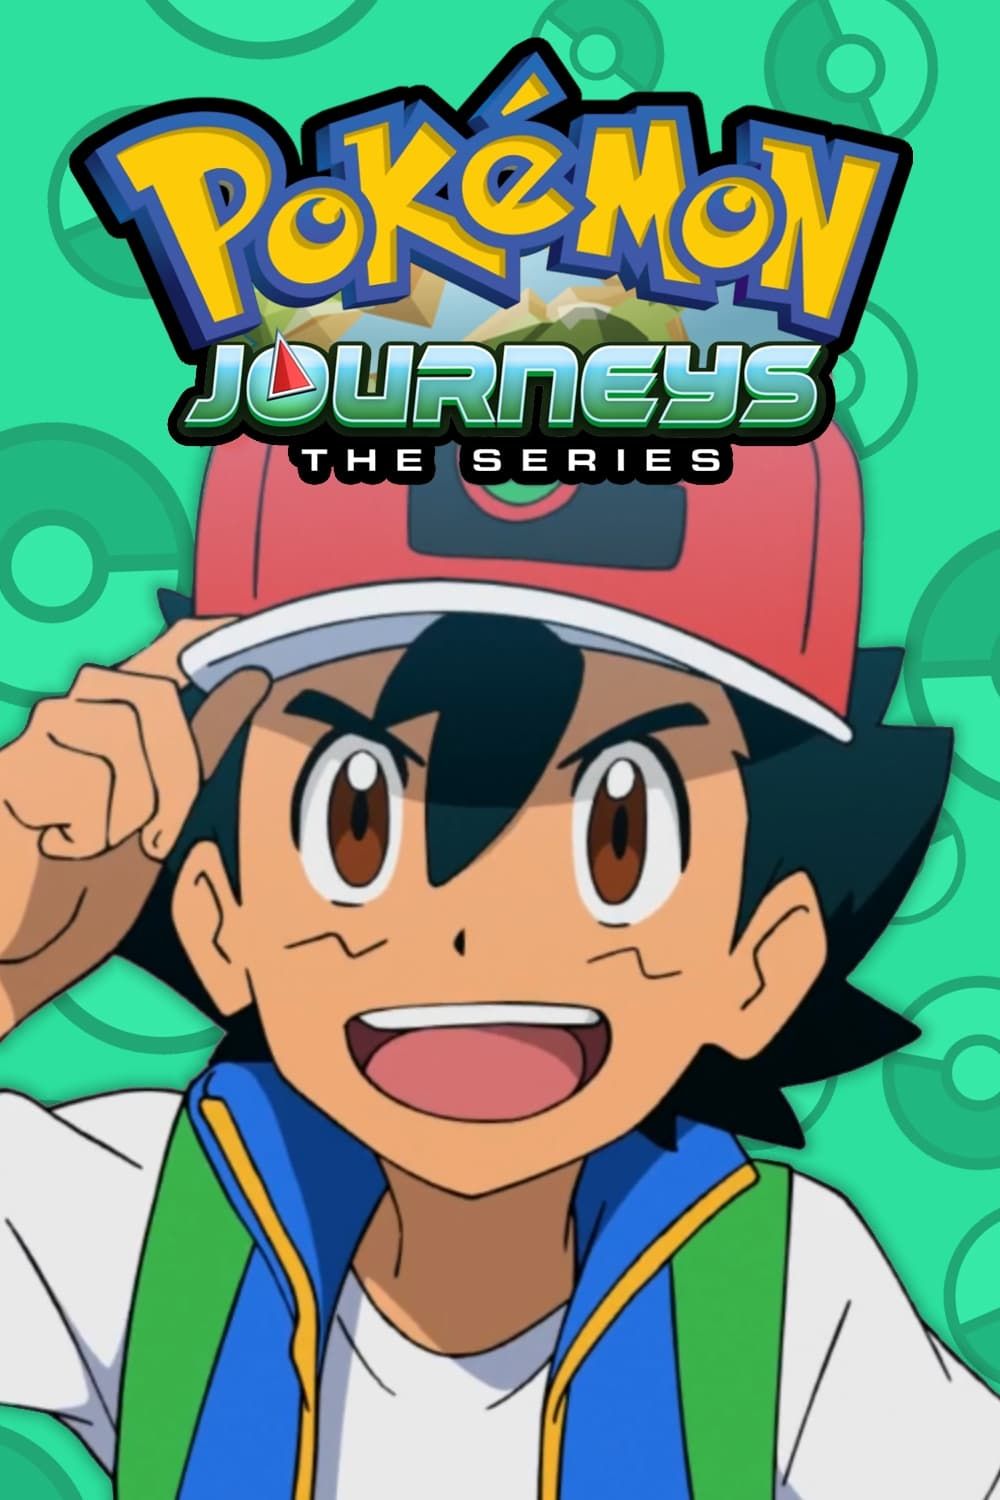 Pokemon The Series: Master Journeys Complete Season (DVD)